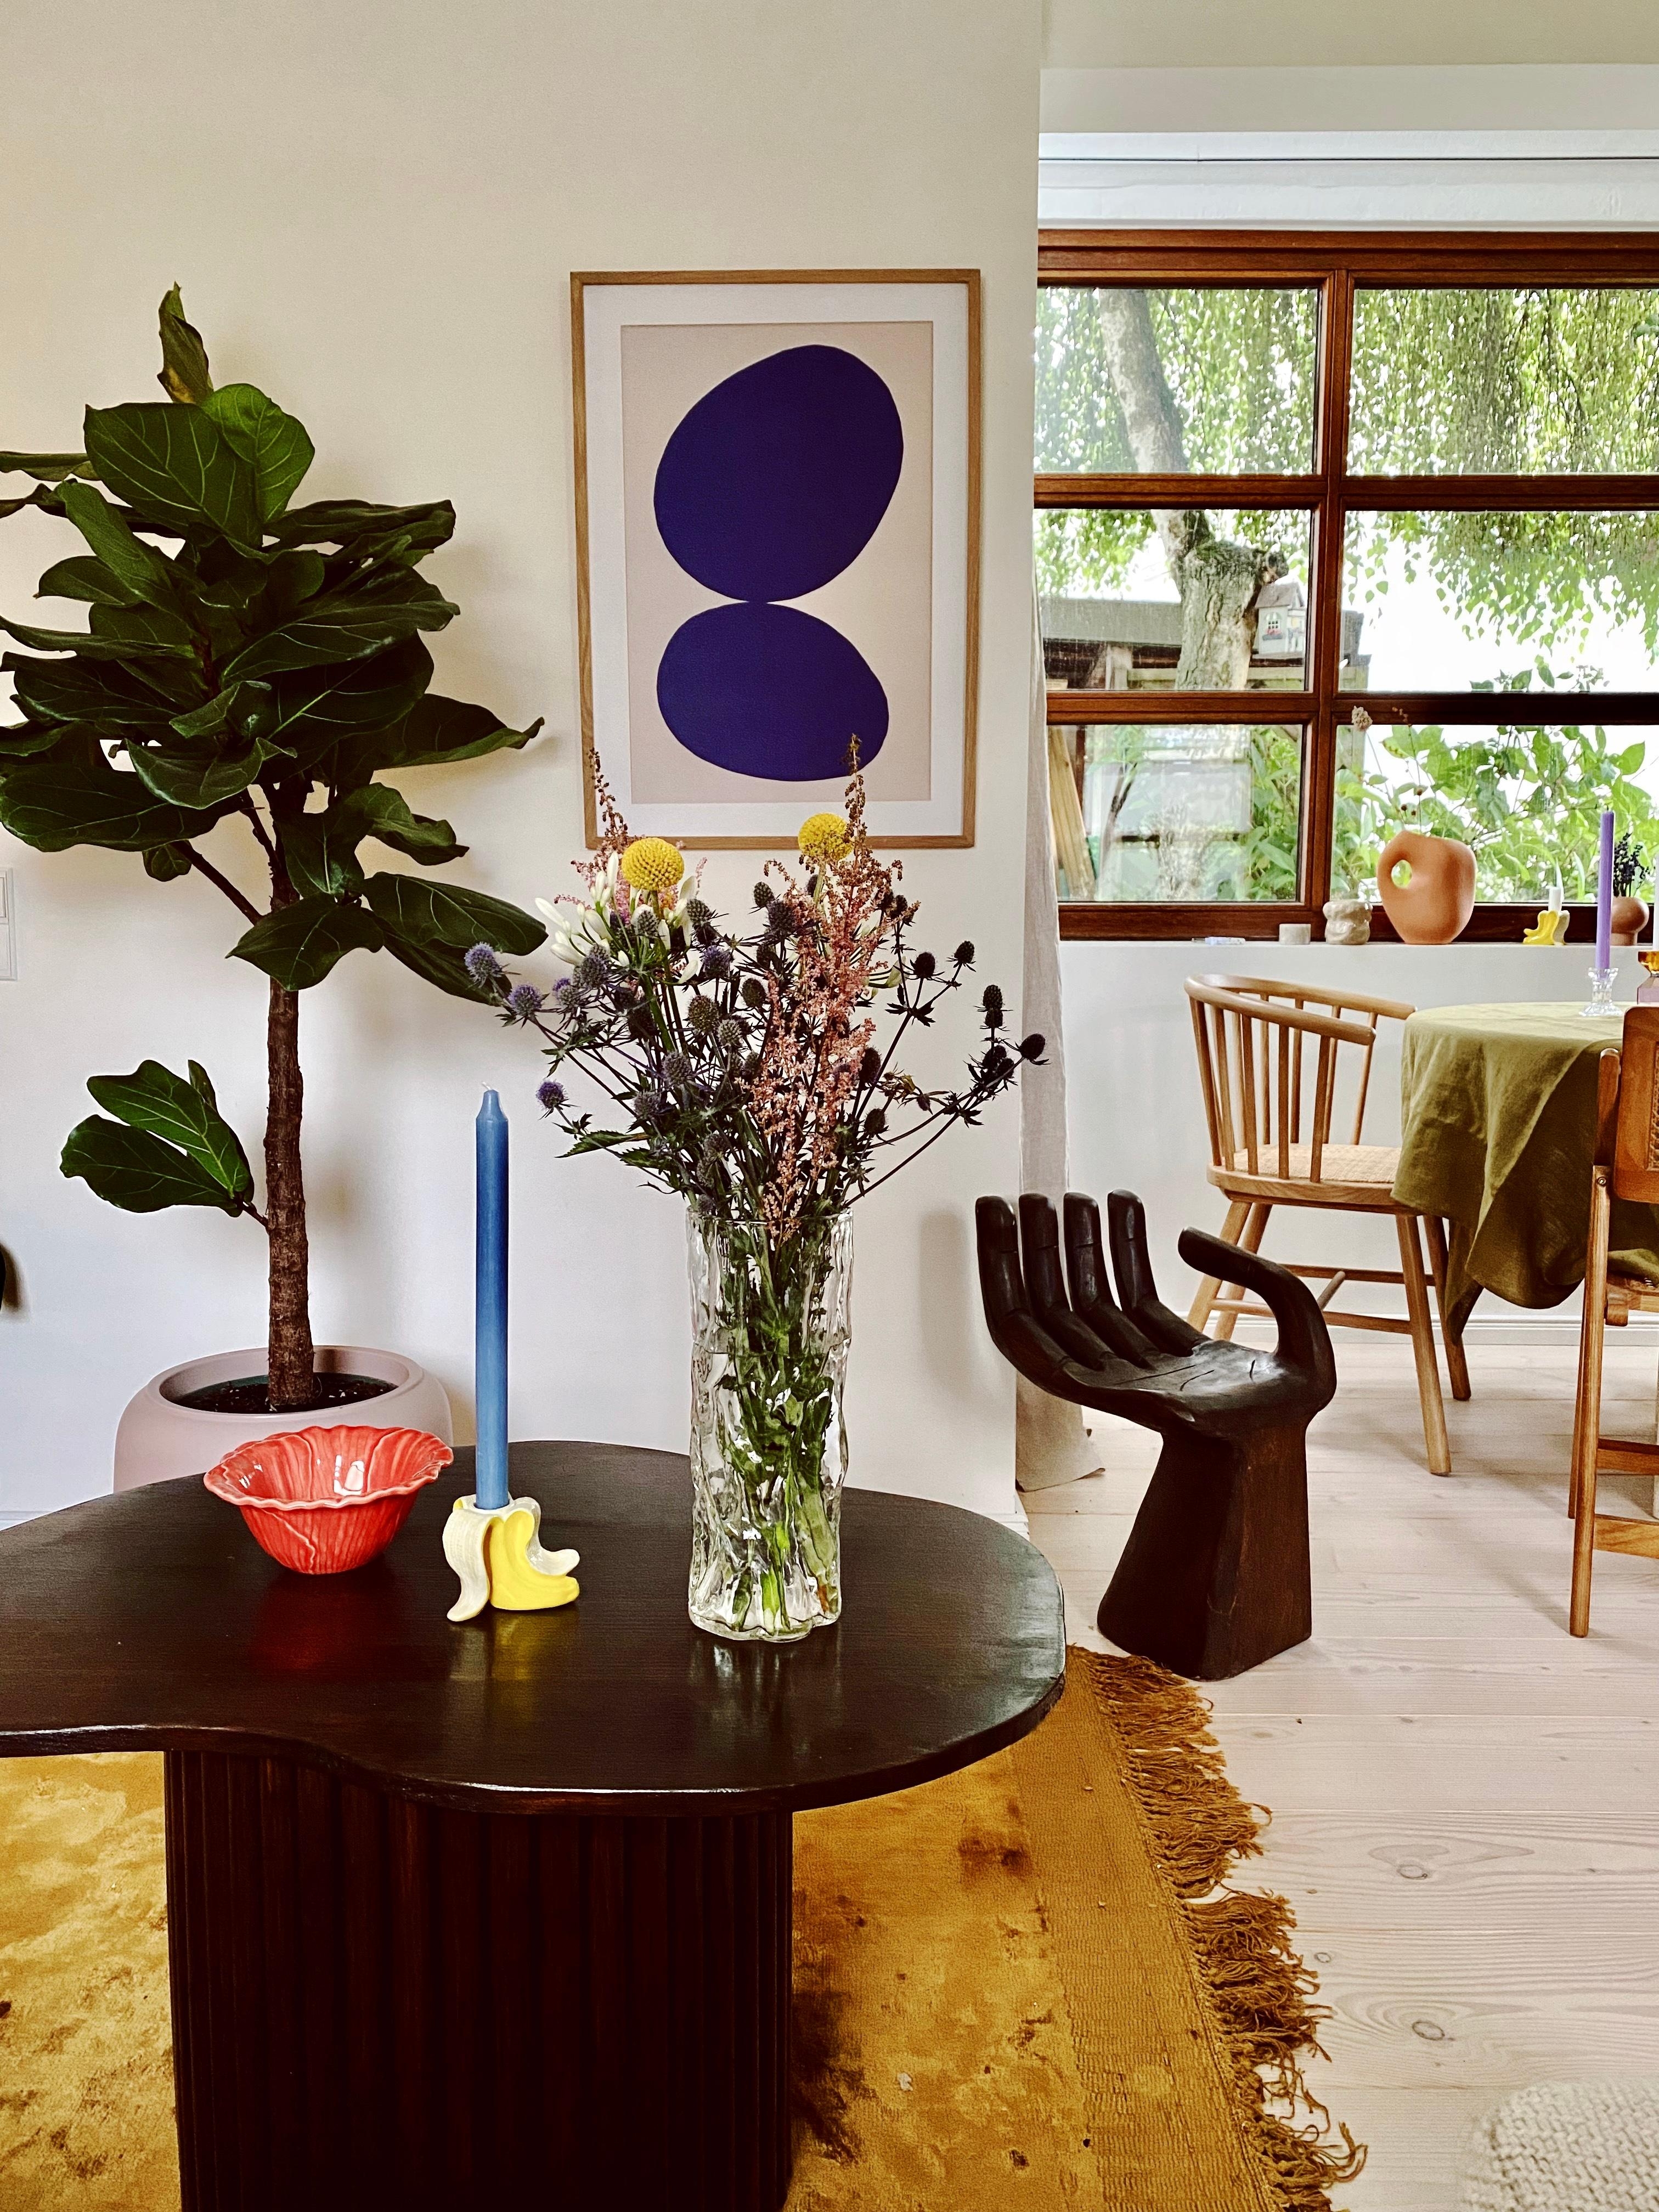 💙
#livingroom #midcenturymodern #flowers 